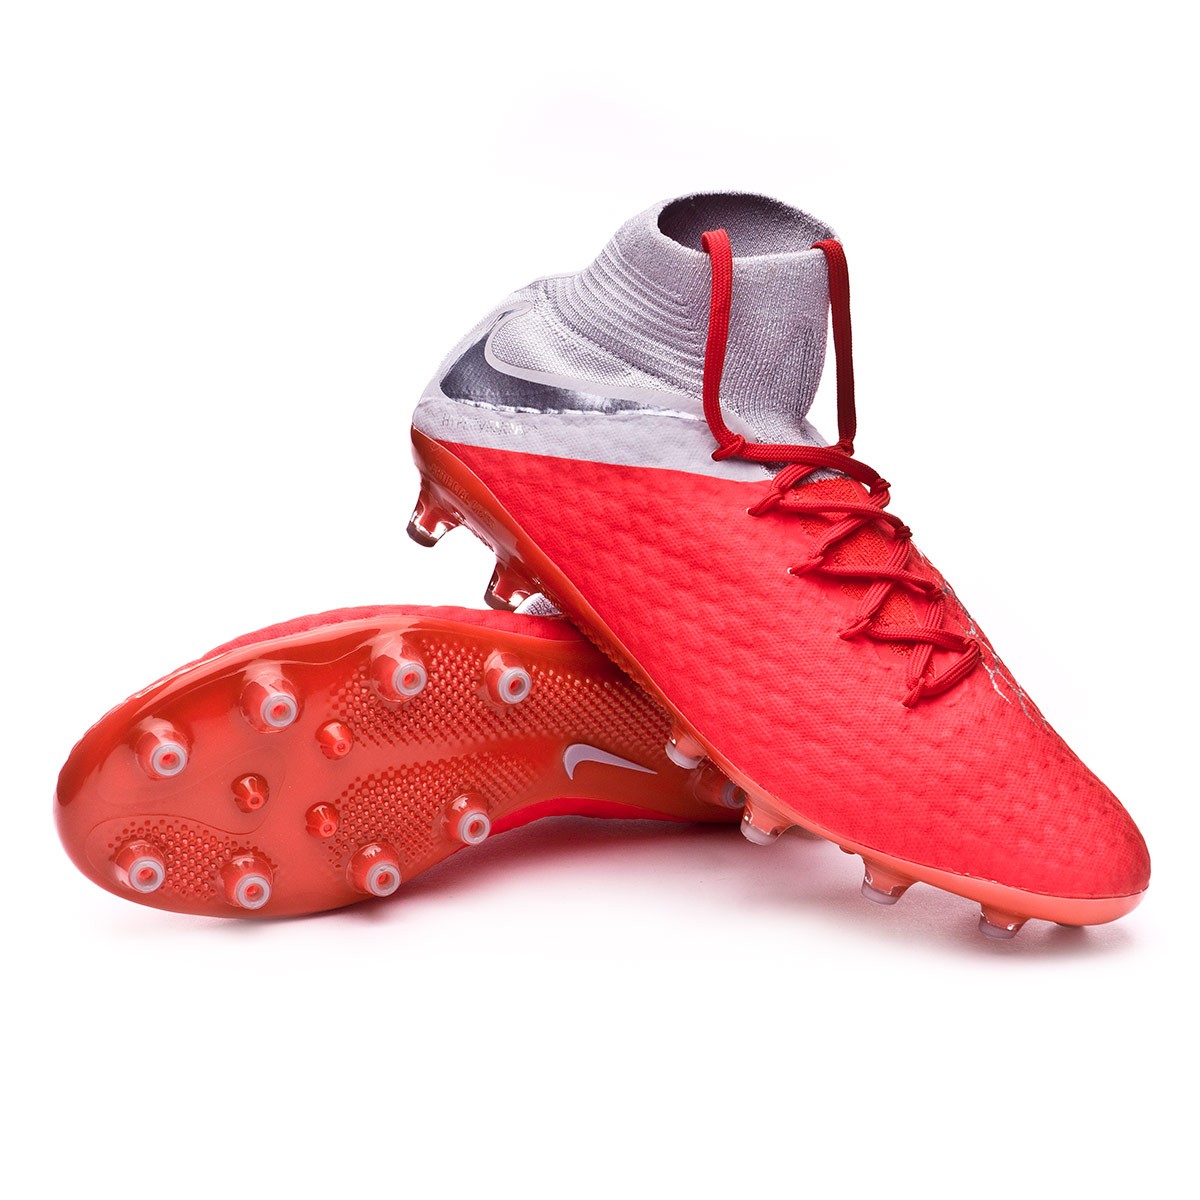 Football Boots Nike Hypervenom Phantom III Pro DF AG-Pro Light  crimson-Metallic dark grey-Wolf grey - Football store Fútbol Emotion